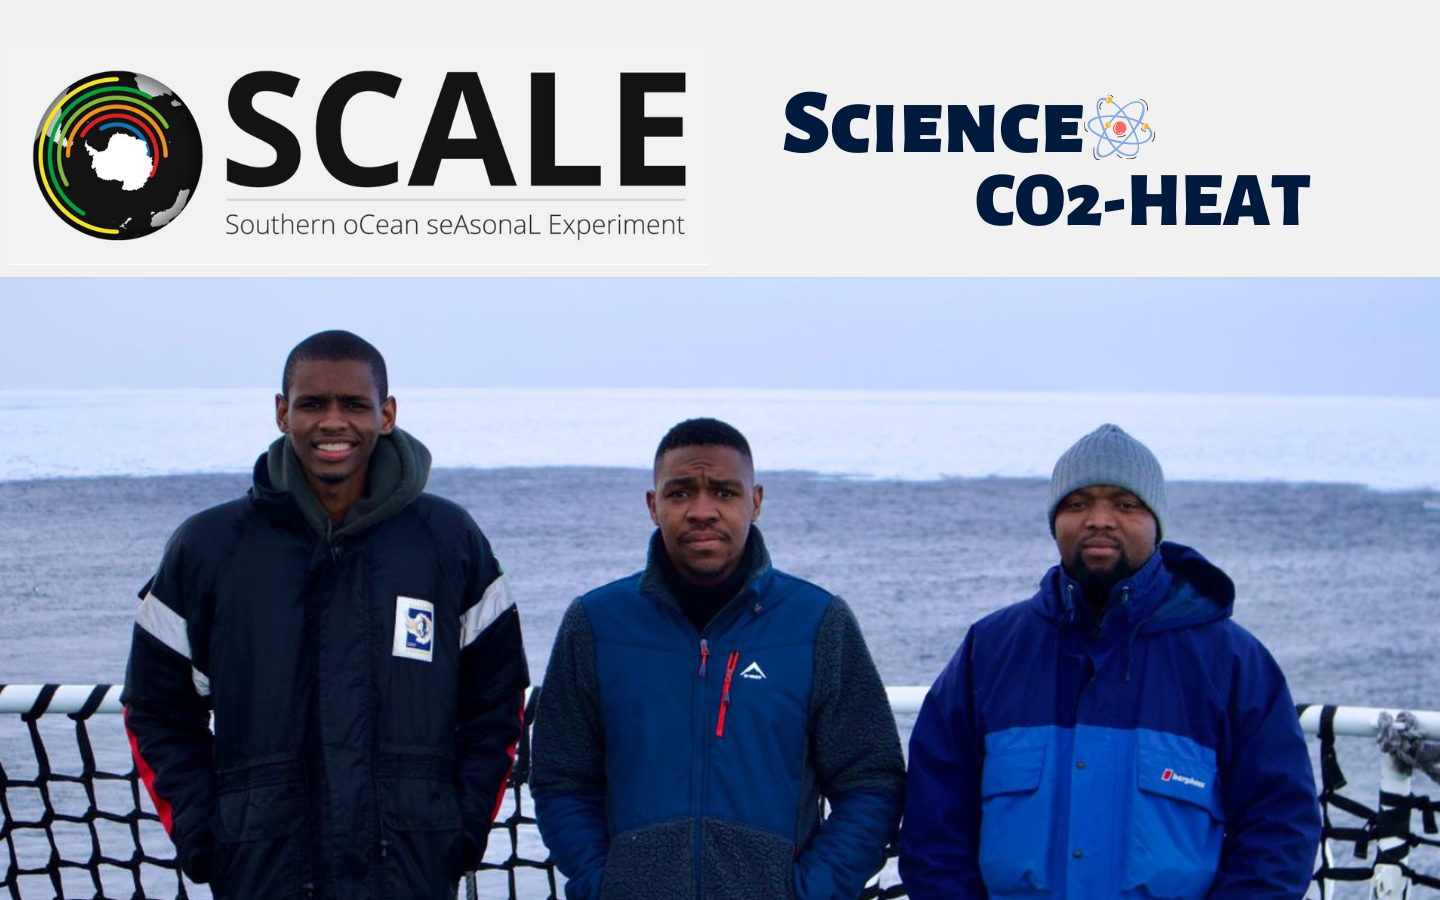 SCALE-WIN22: Science Team CO2-HEAT